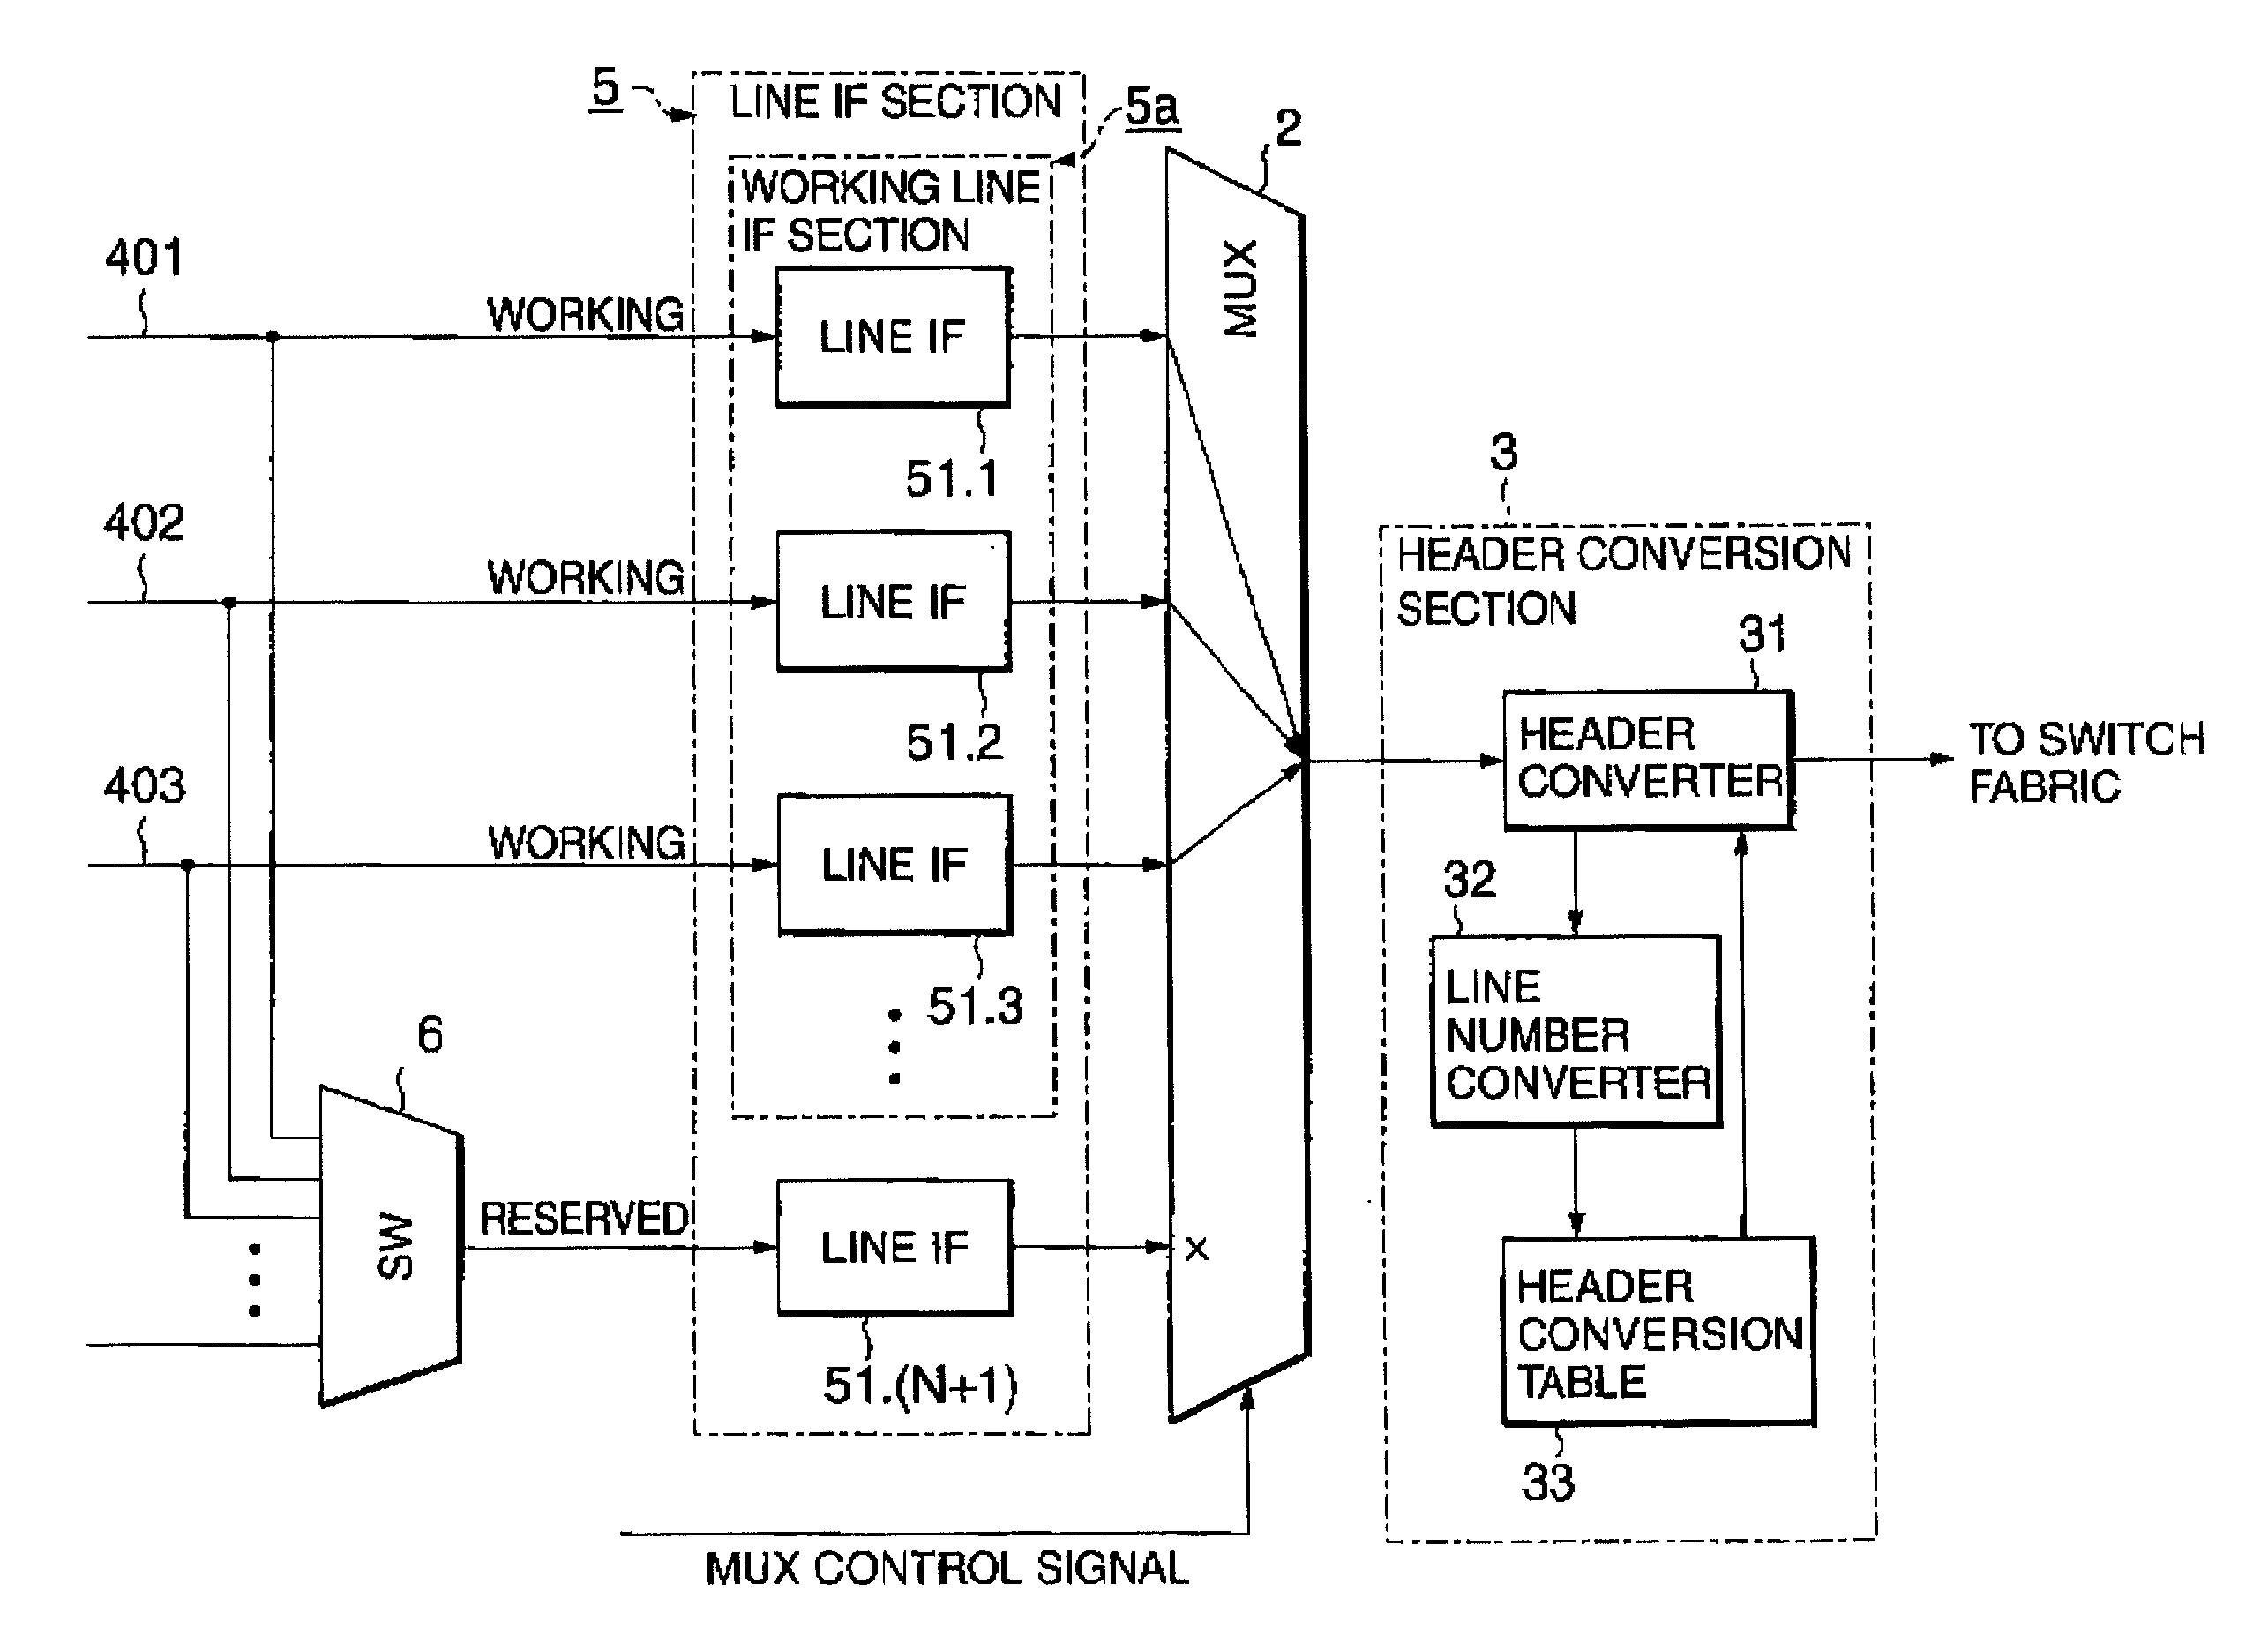 Header conversion technique in ATM switch